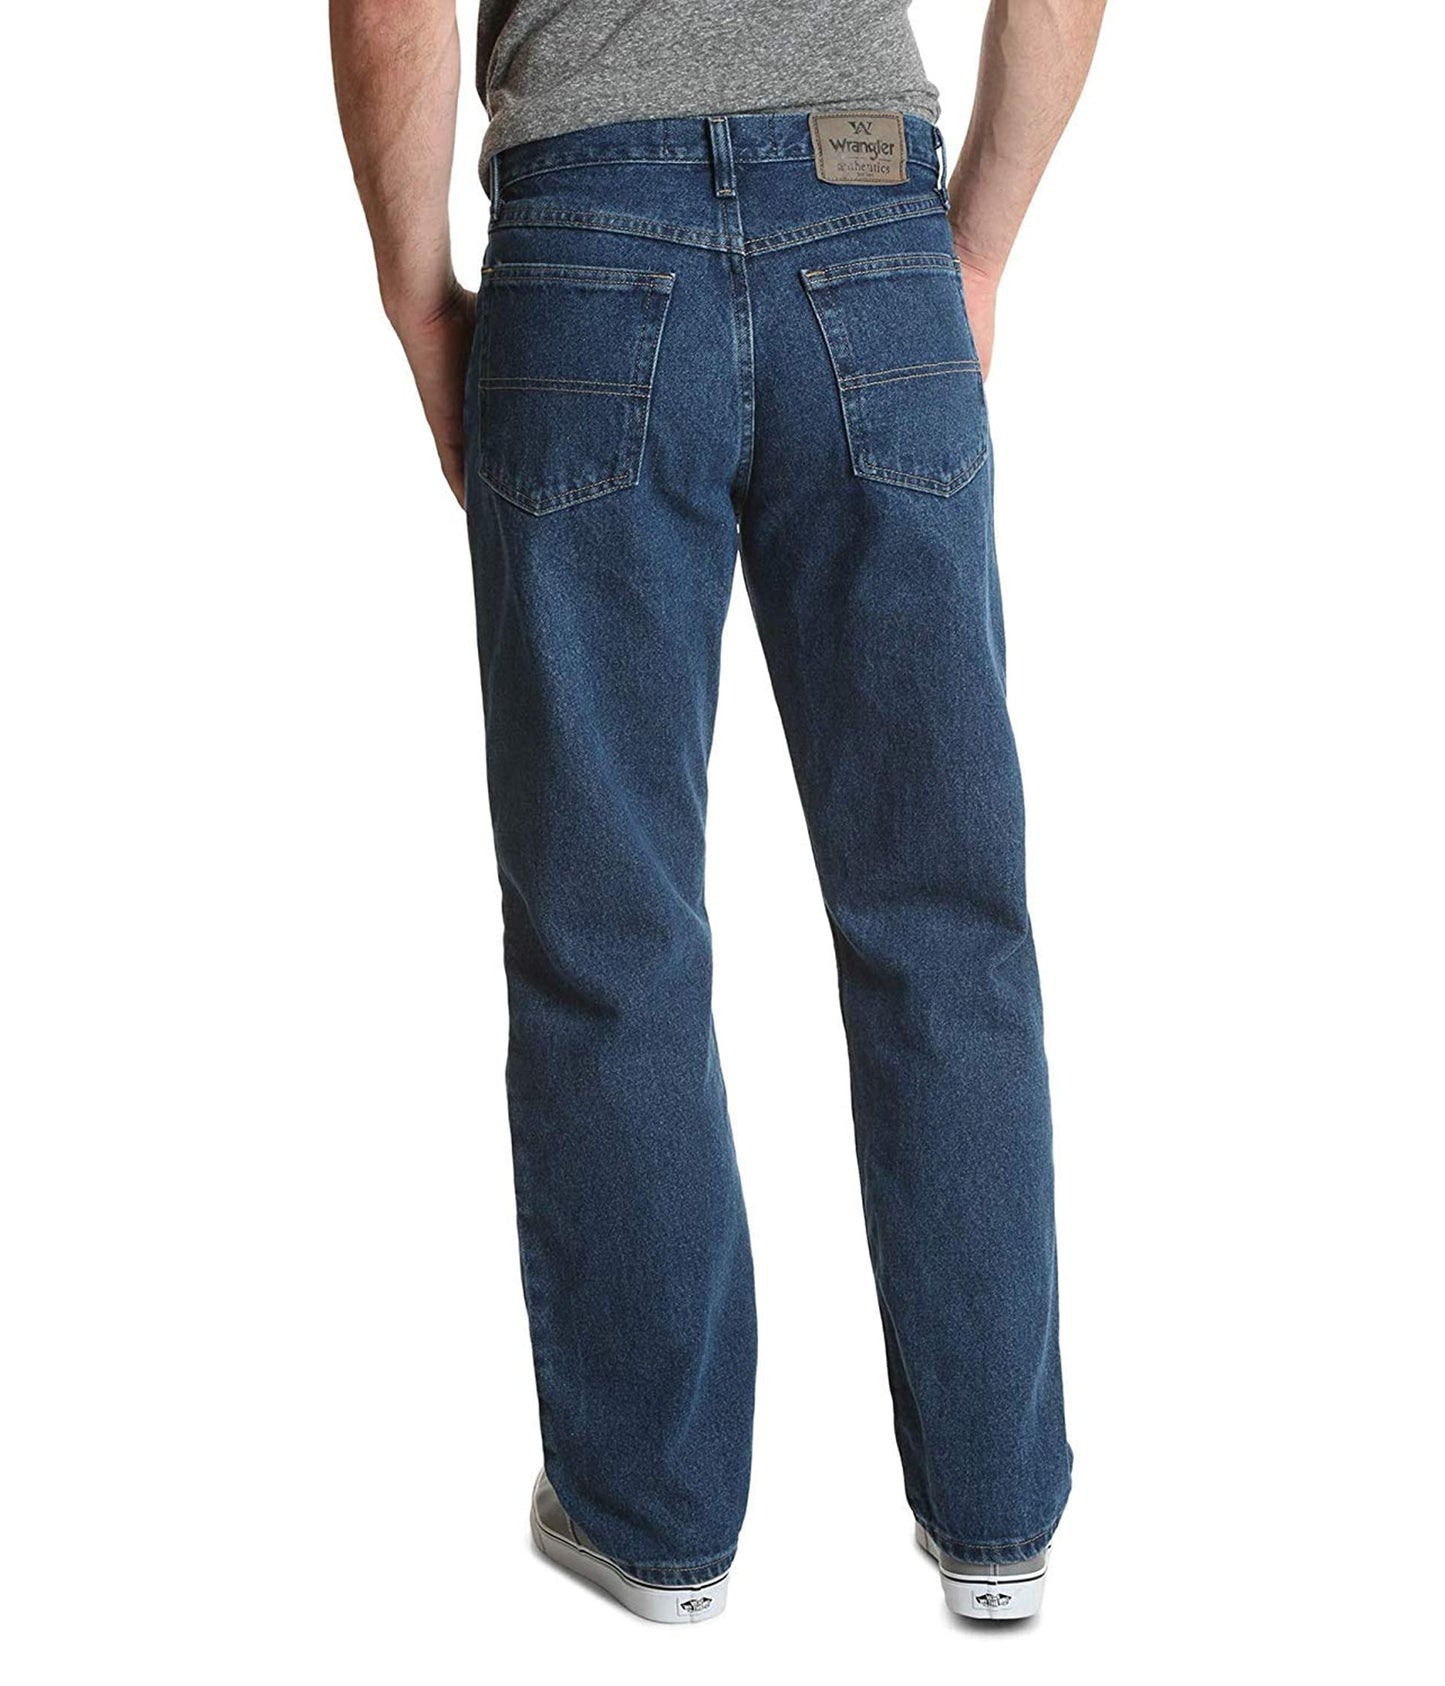 Wrangler Authentics Men's Classic 5-Pocket Relaxed Fit Cotton Jean, Dark Stonewash, 33W x 34L